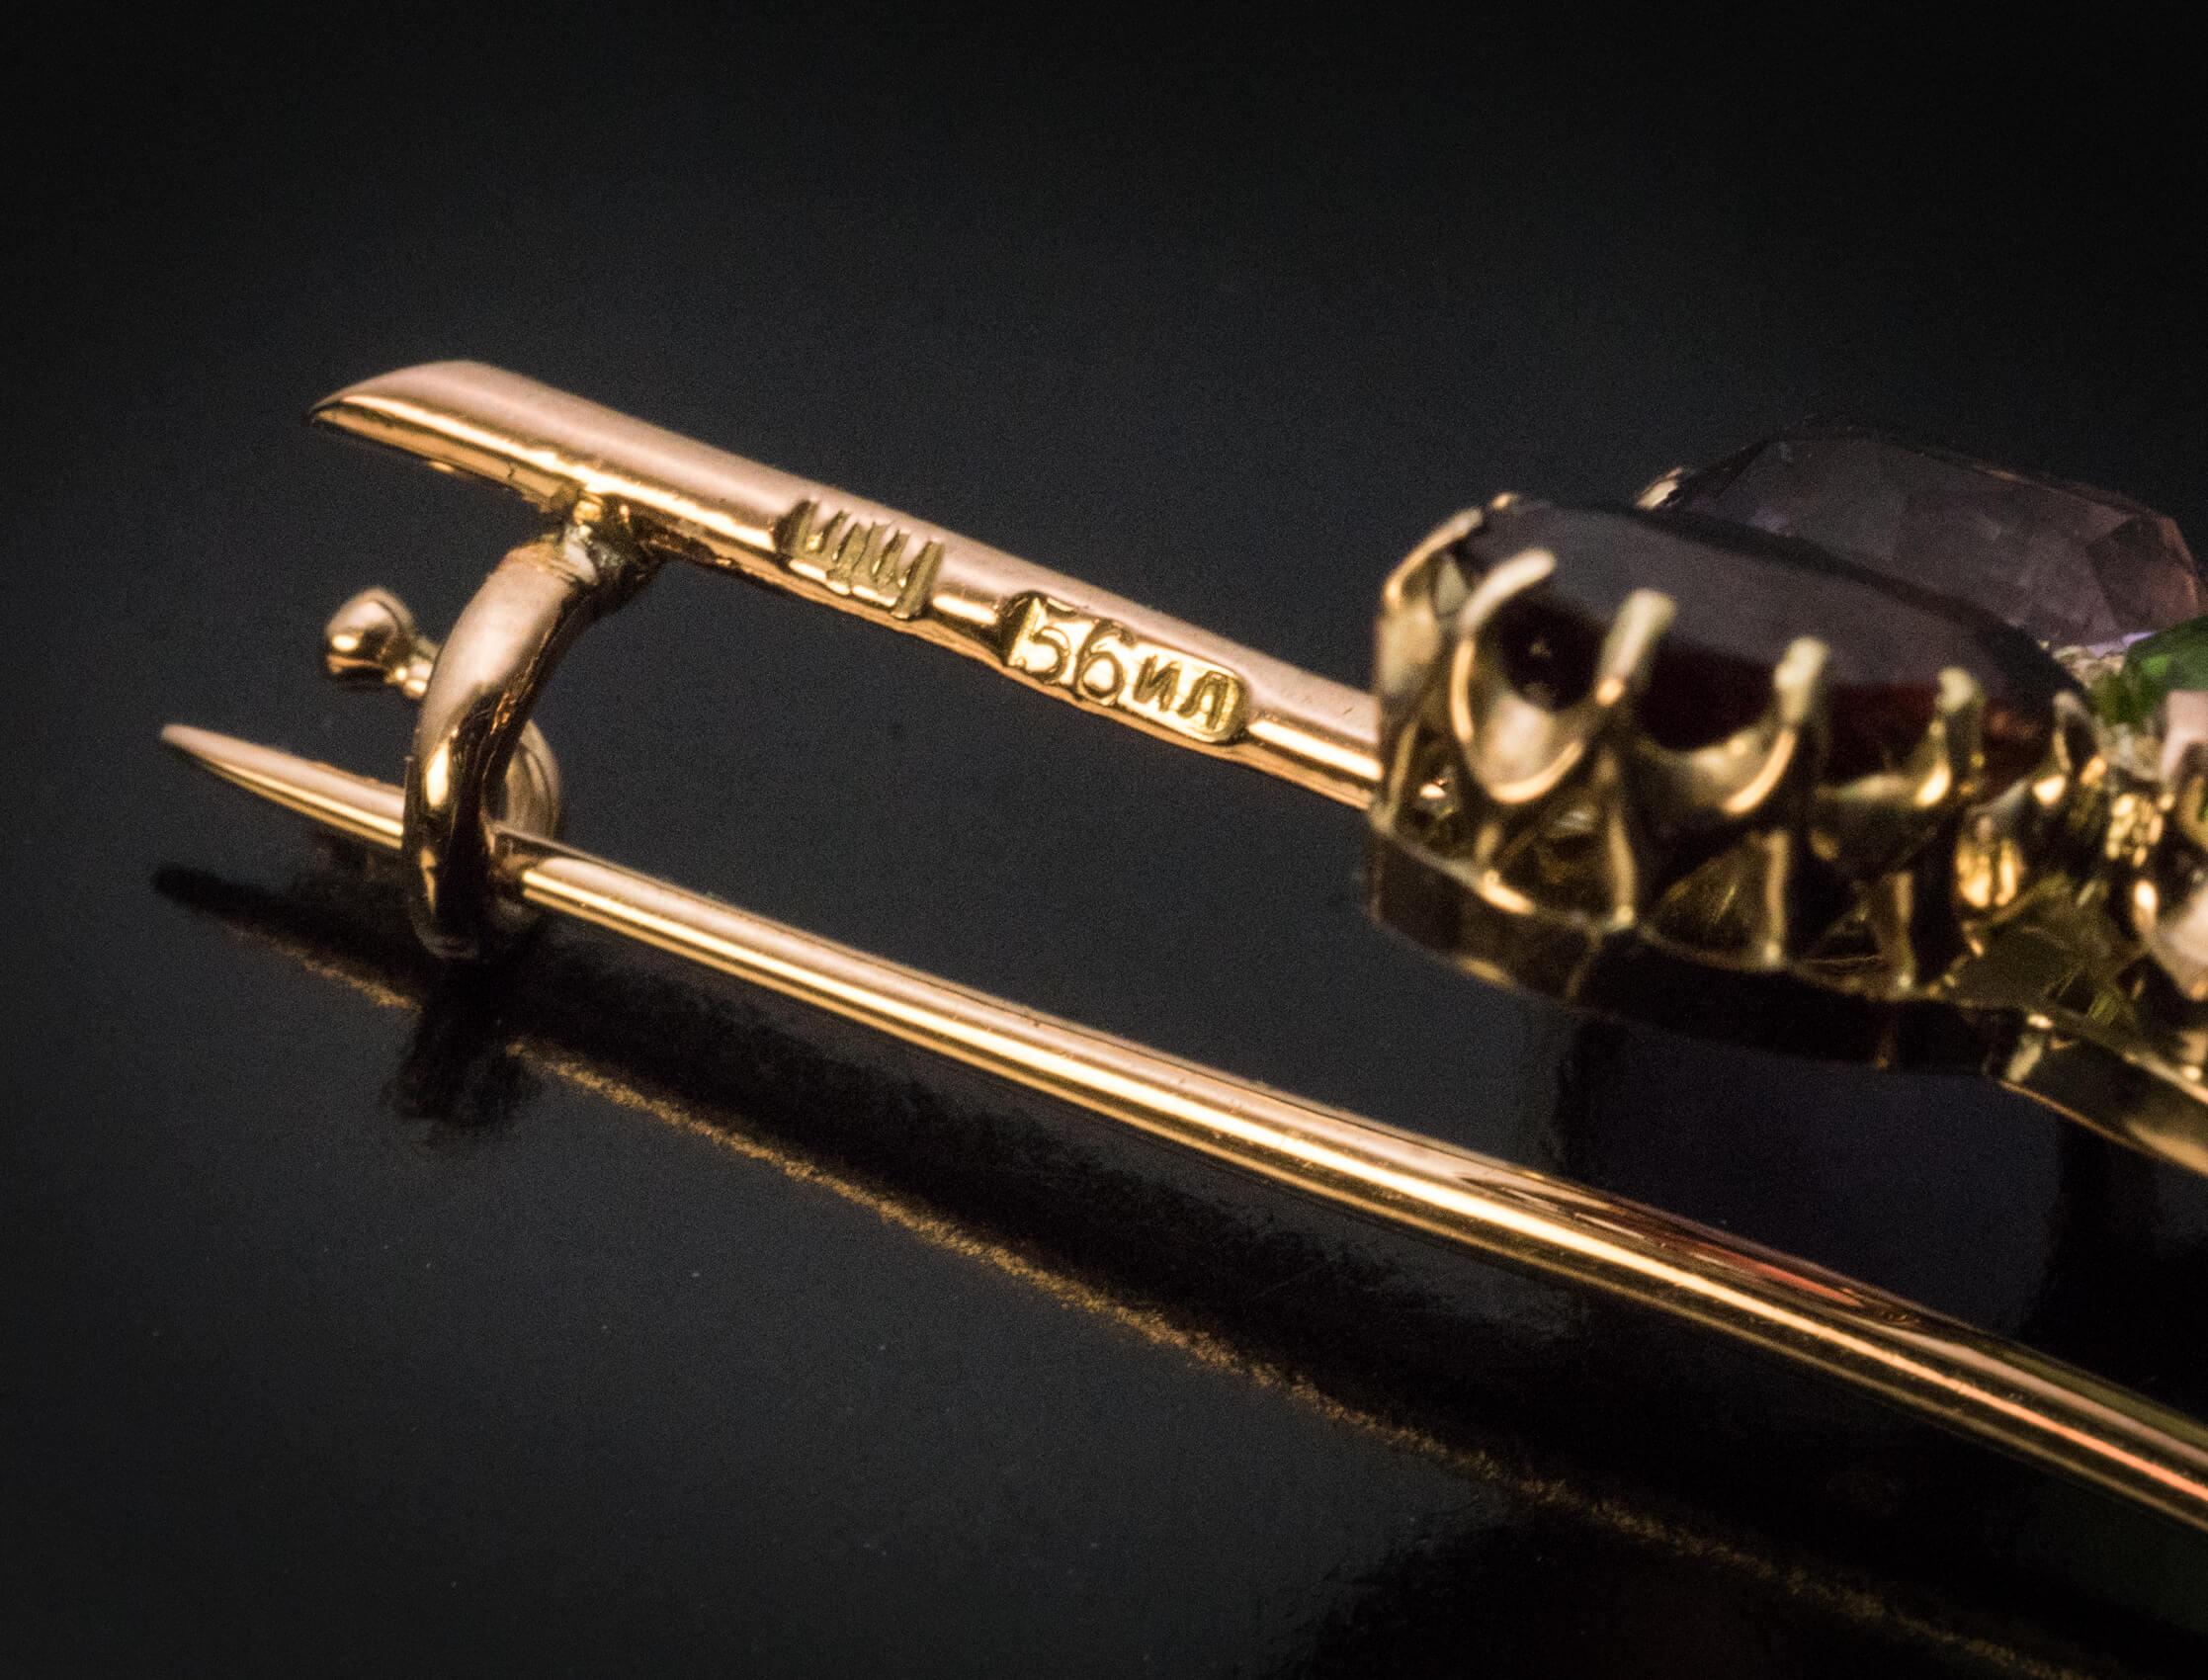 Brenda Ginsberg Antique Jewelry Imperial Russian Romanov Stick Pin GrandDuke Vladimir Gold Diamond Ruby (7313)